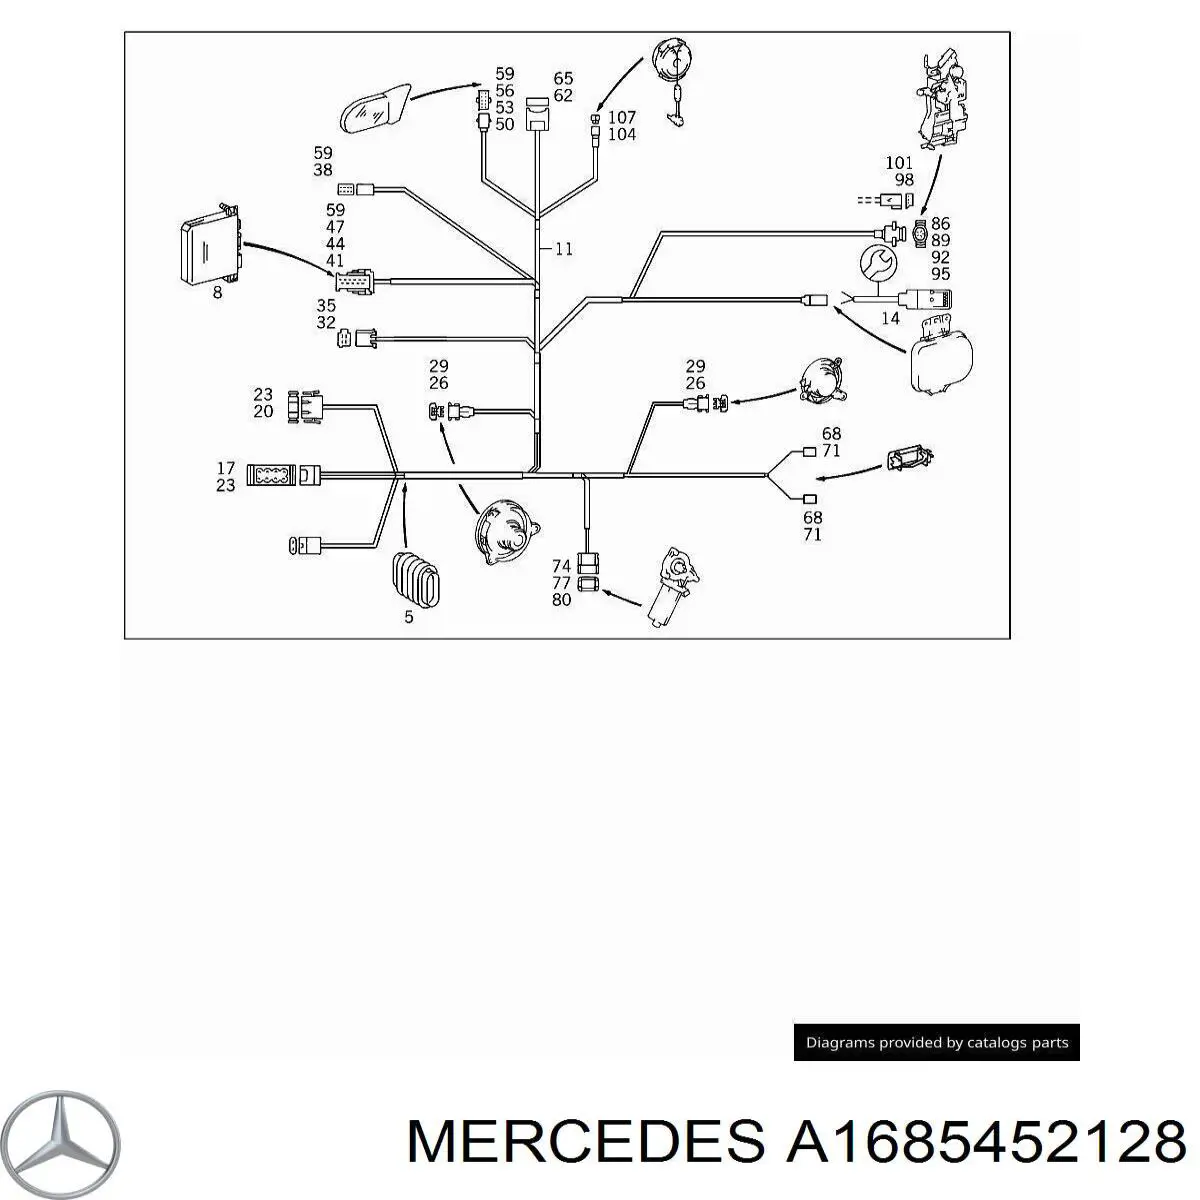 A1685452128 Mercedes